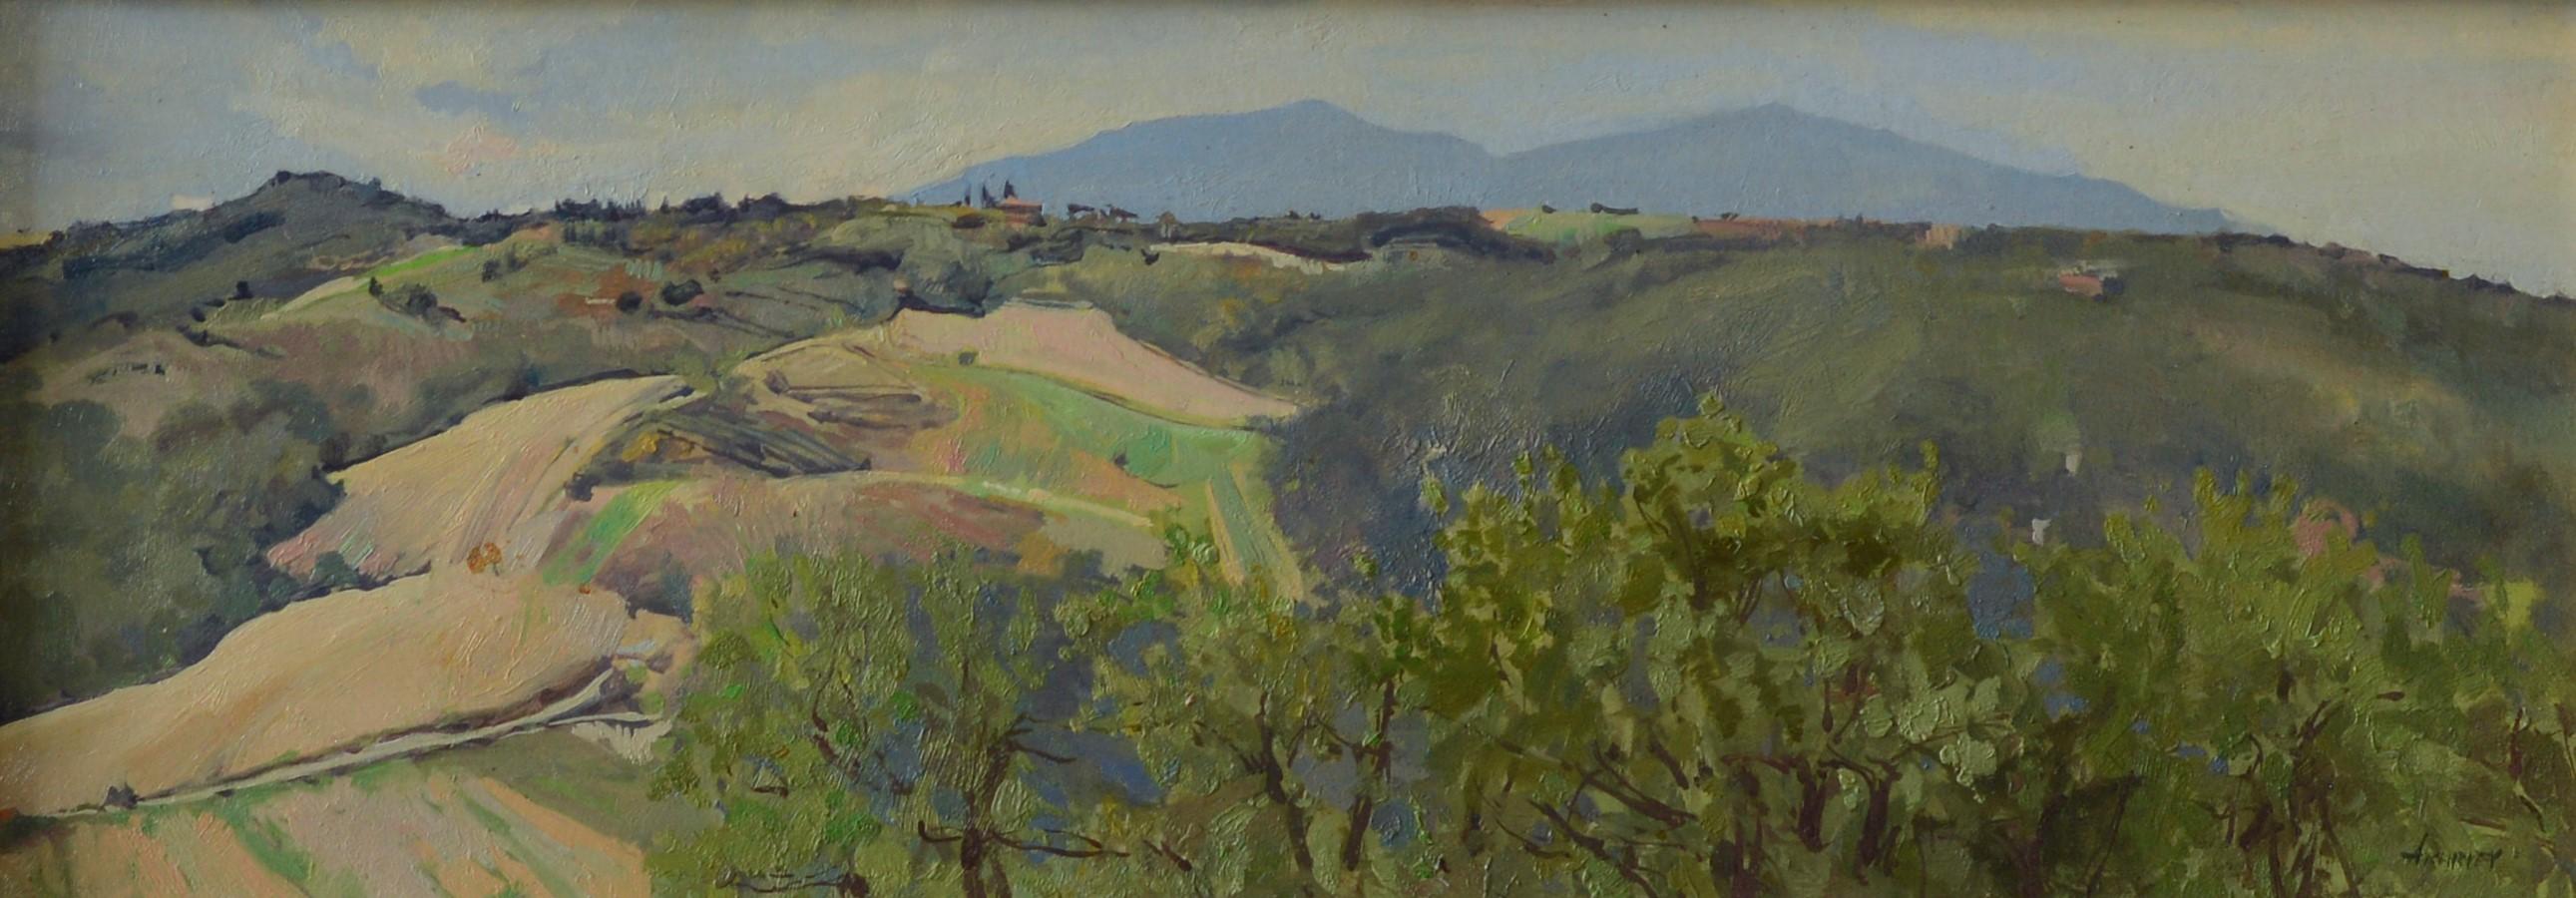 Daud Akhriev Landscape Painting - "Tuscany" Oil Painting